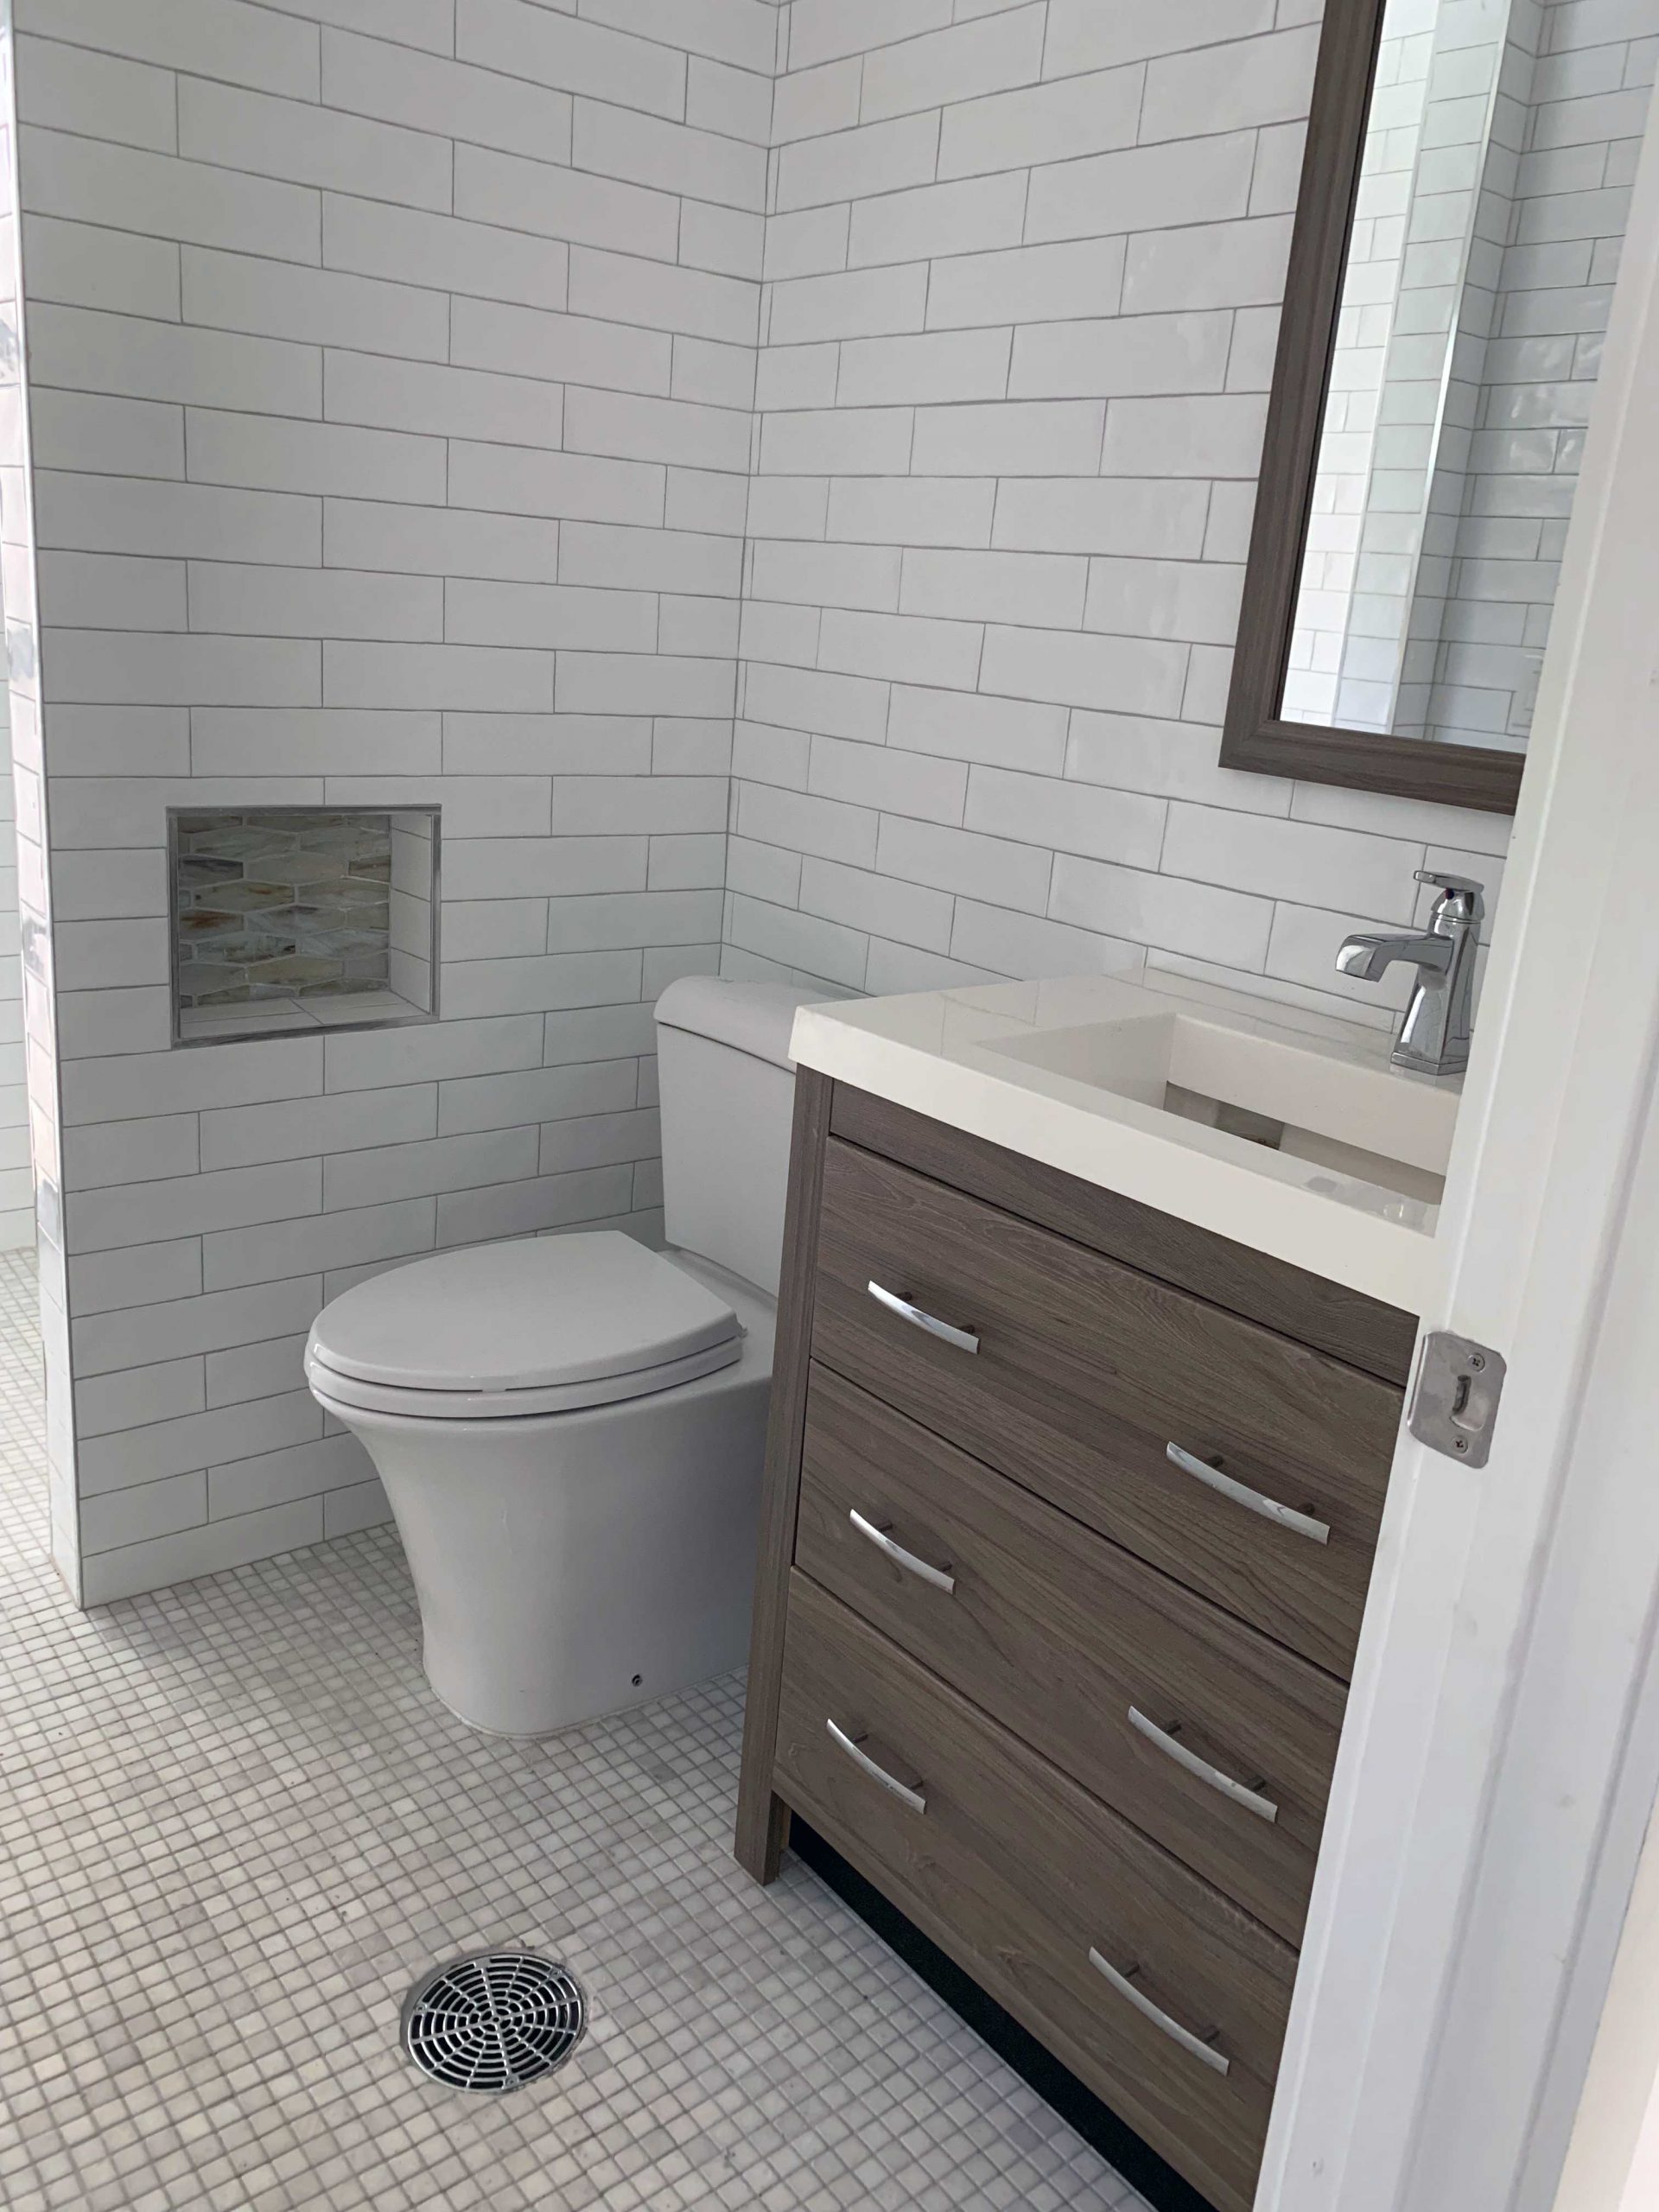 Canyon Creek Design Build Bathroom Renovations in Austin, Texas